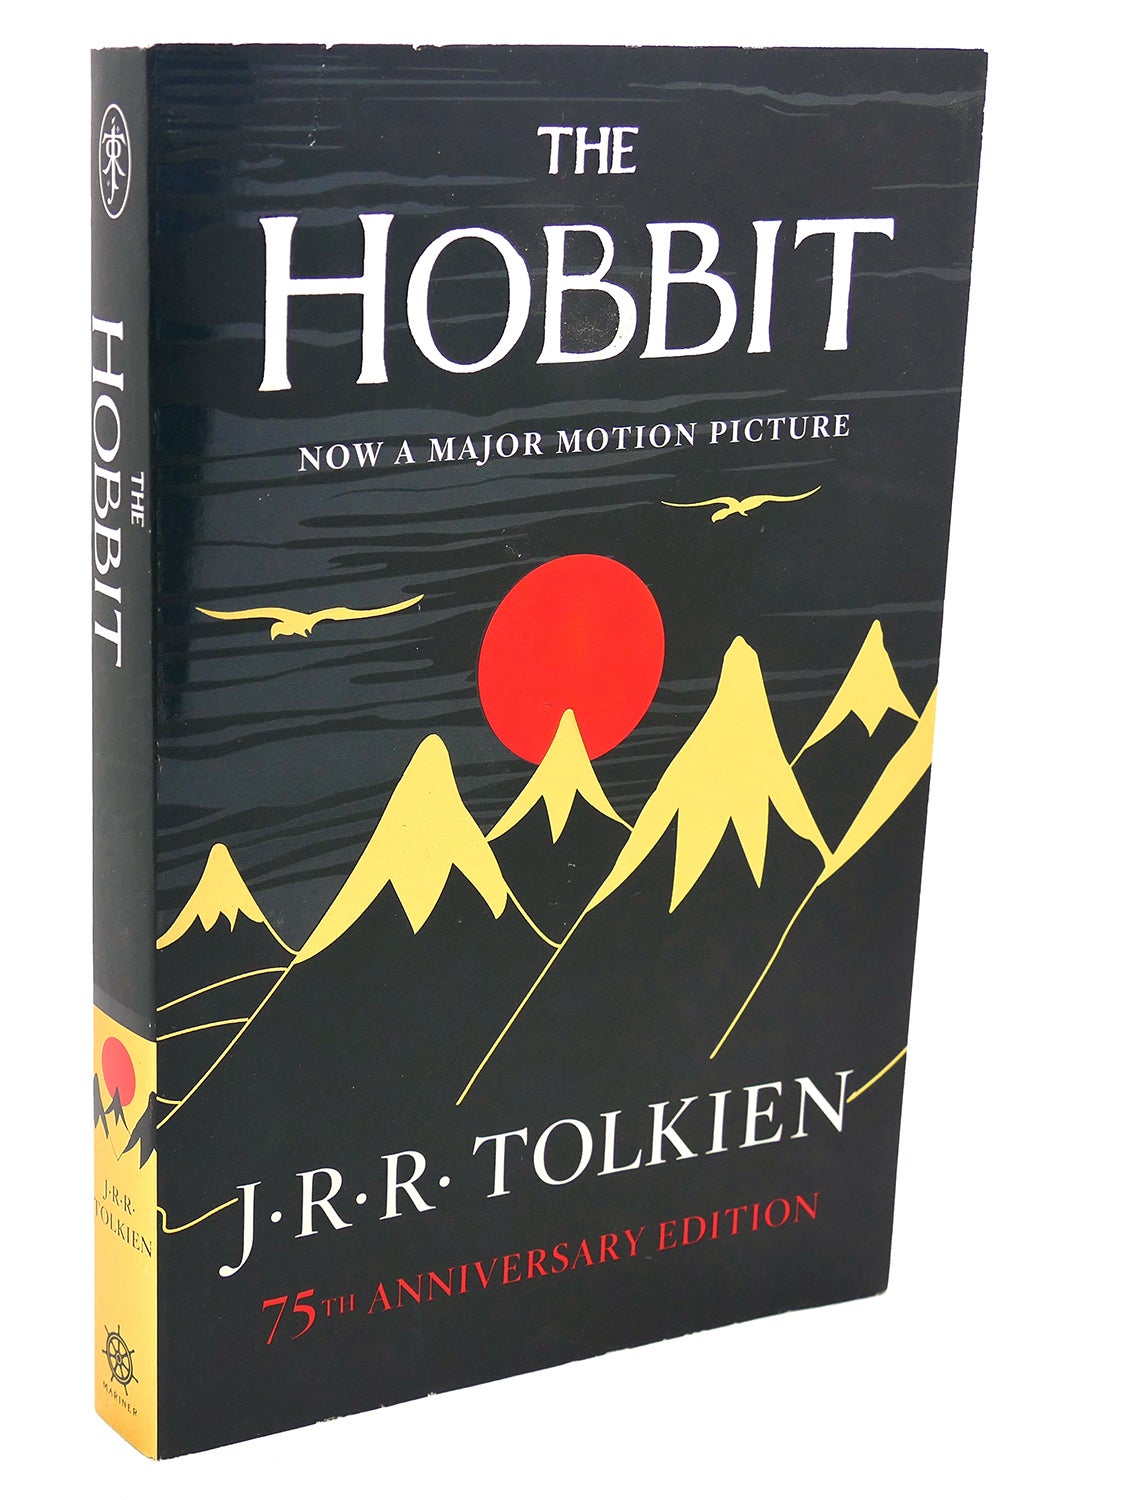 THE HOBBIT | J. R. R. Tolkien | 75th Anniversary Edition